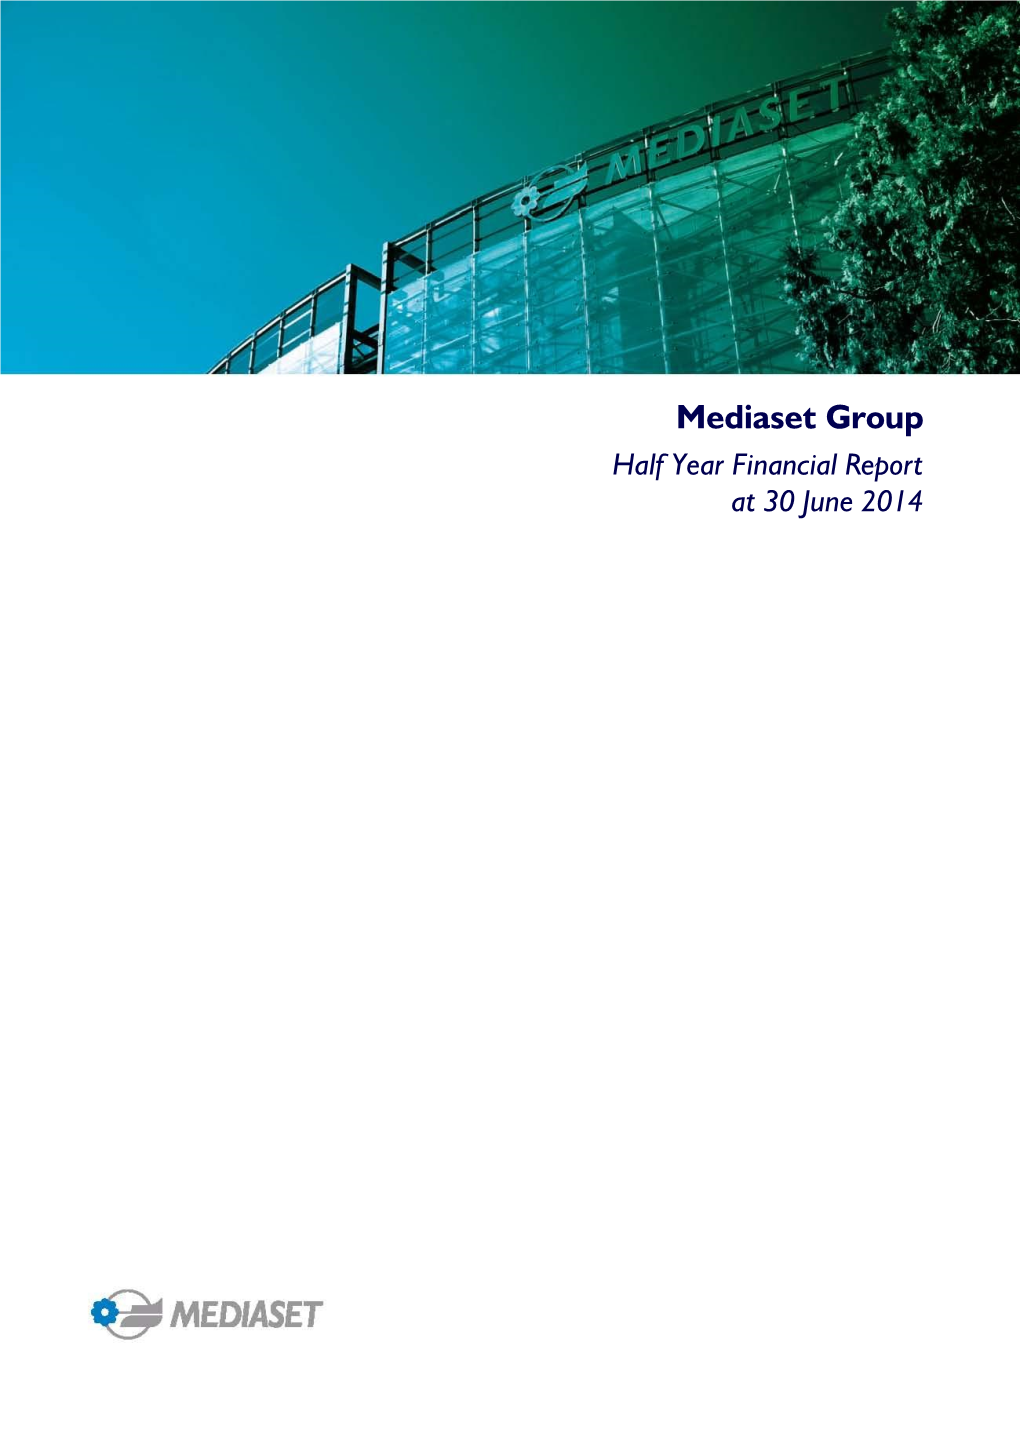 Mediaset Group Half Year Financial Report at 30 June 2014